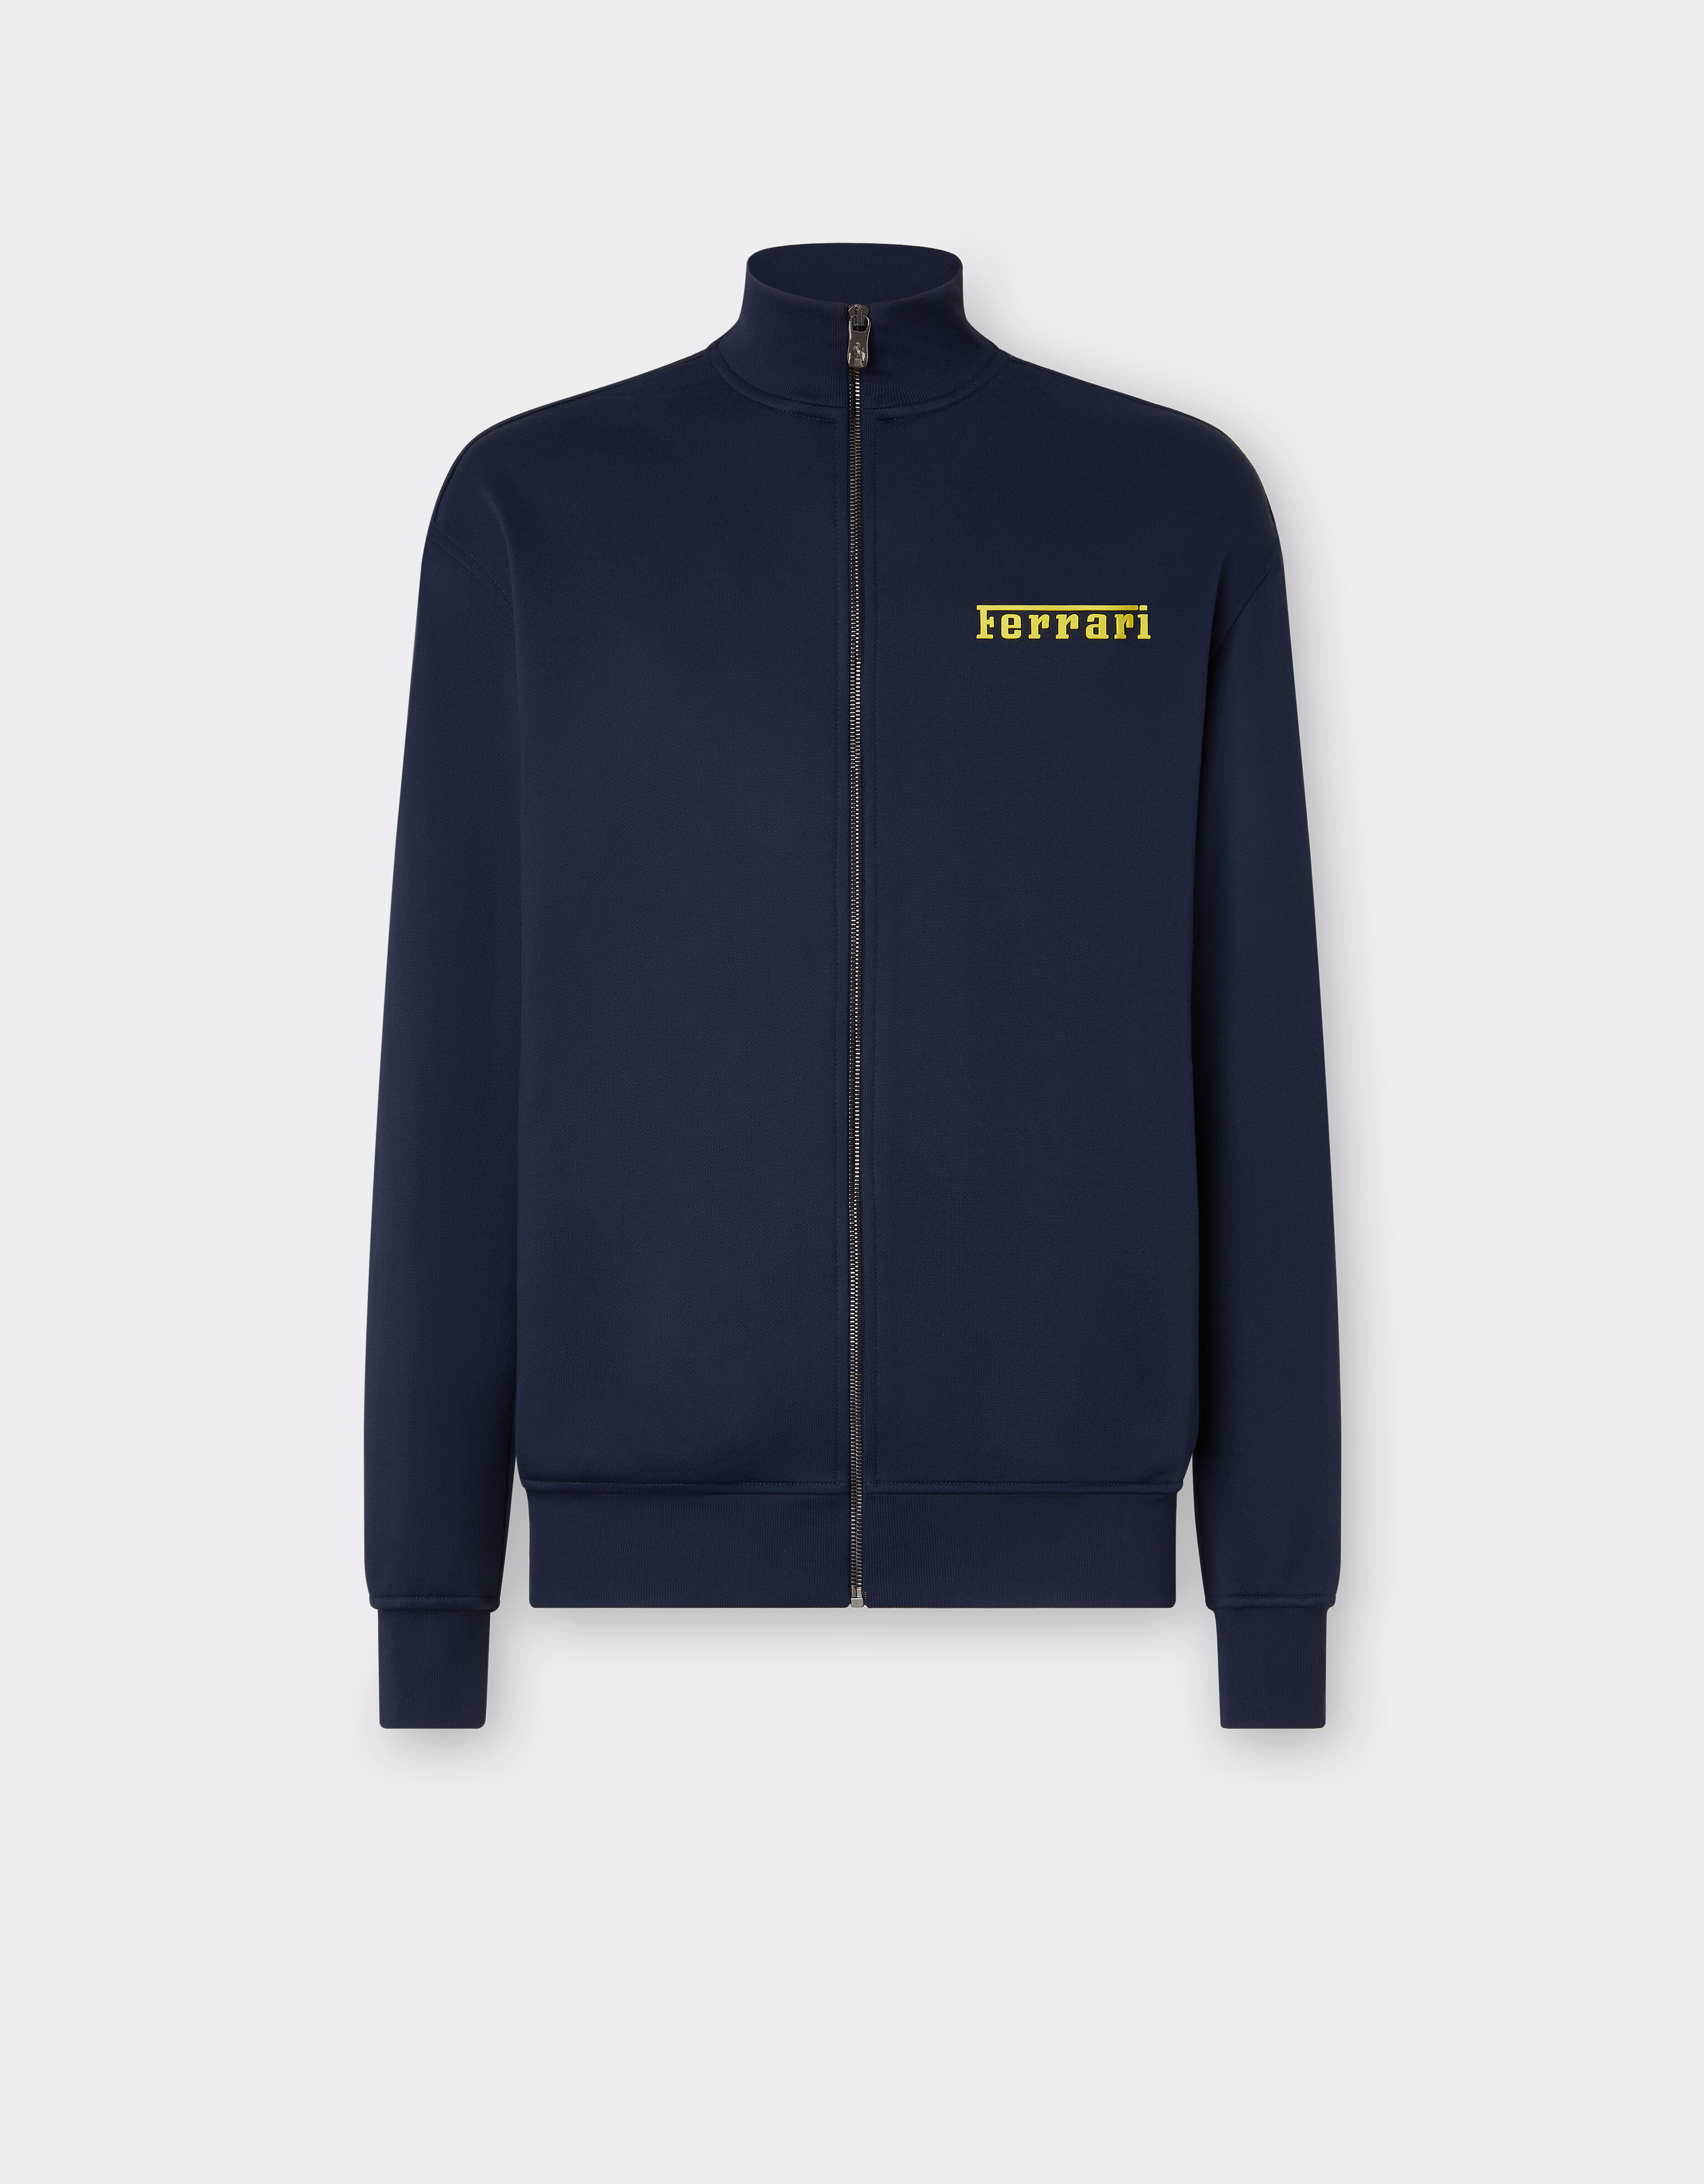 Ferrari Sweatshirt with zip and Ferrari logo Navy 48267f